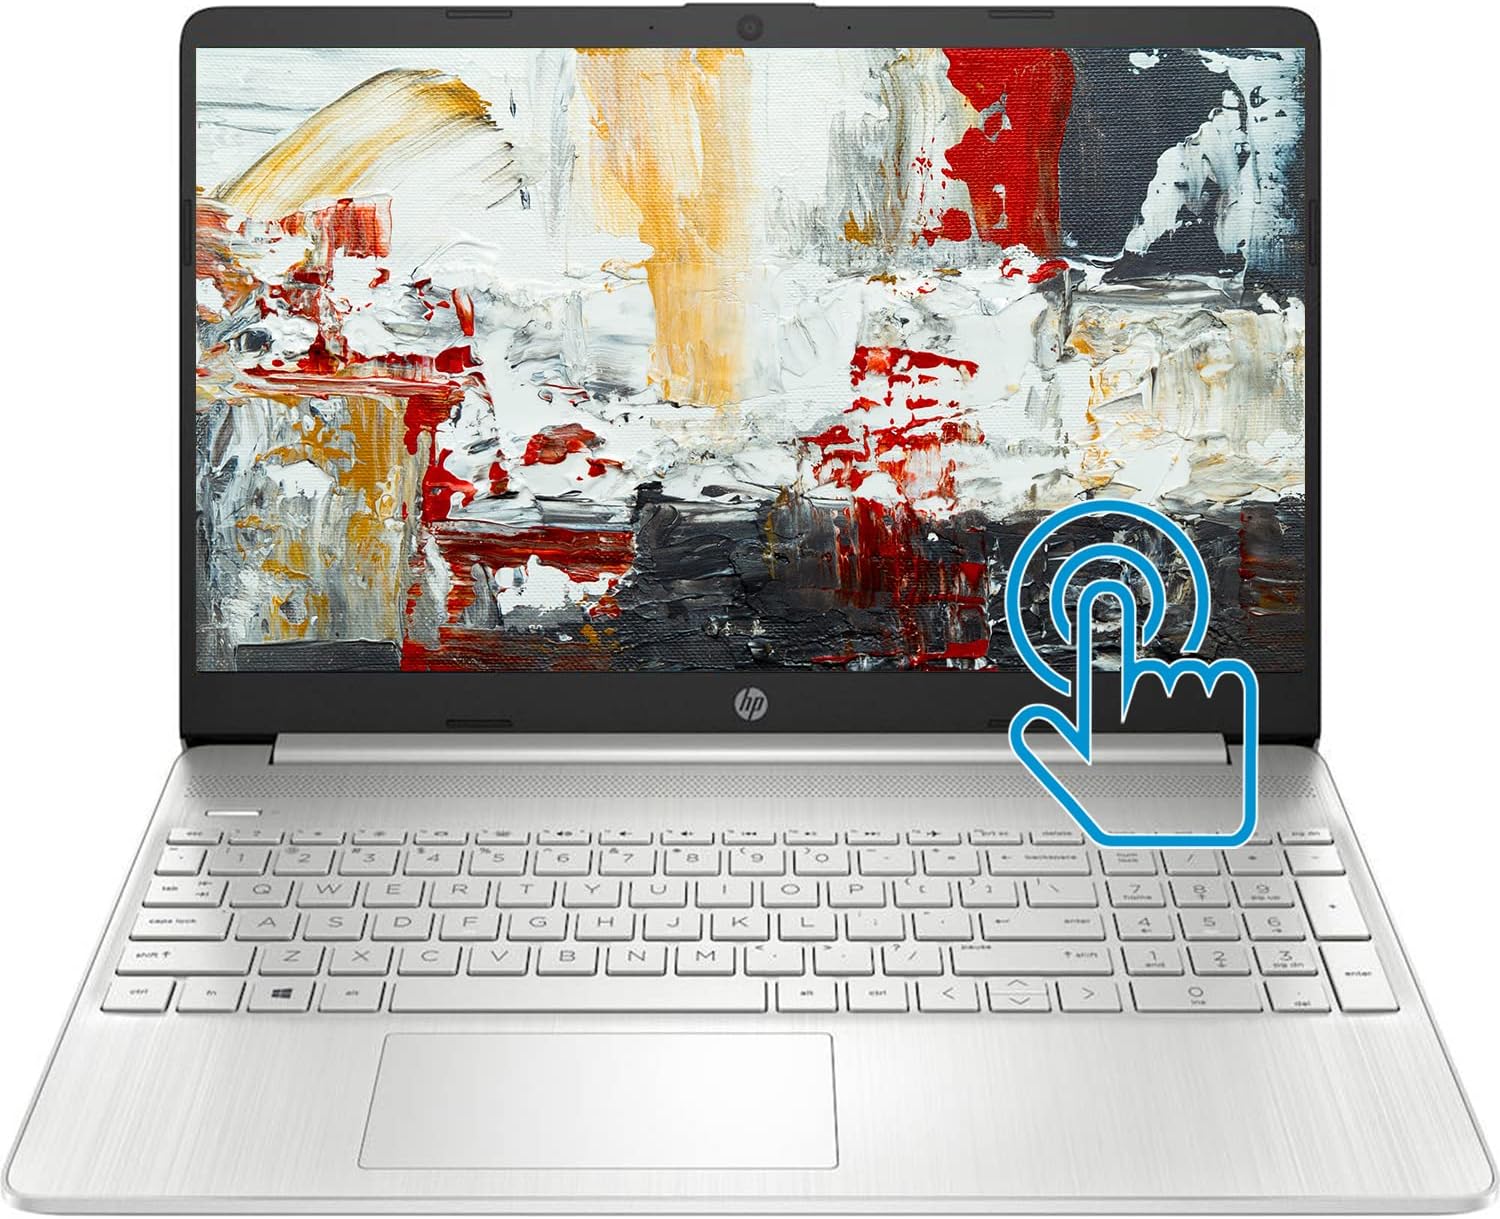 HP Business Laptop, 15.6